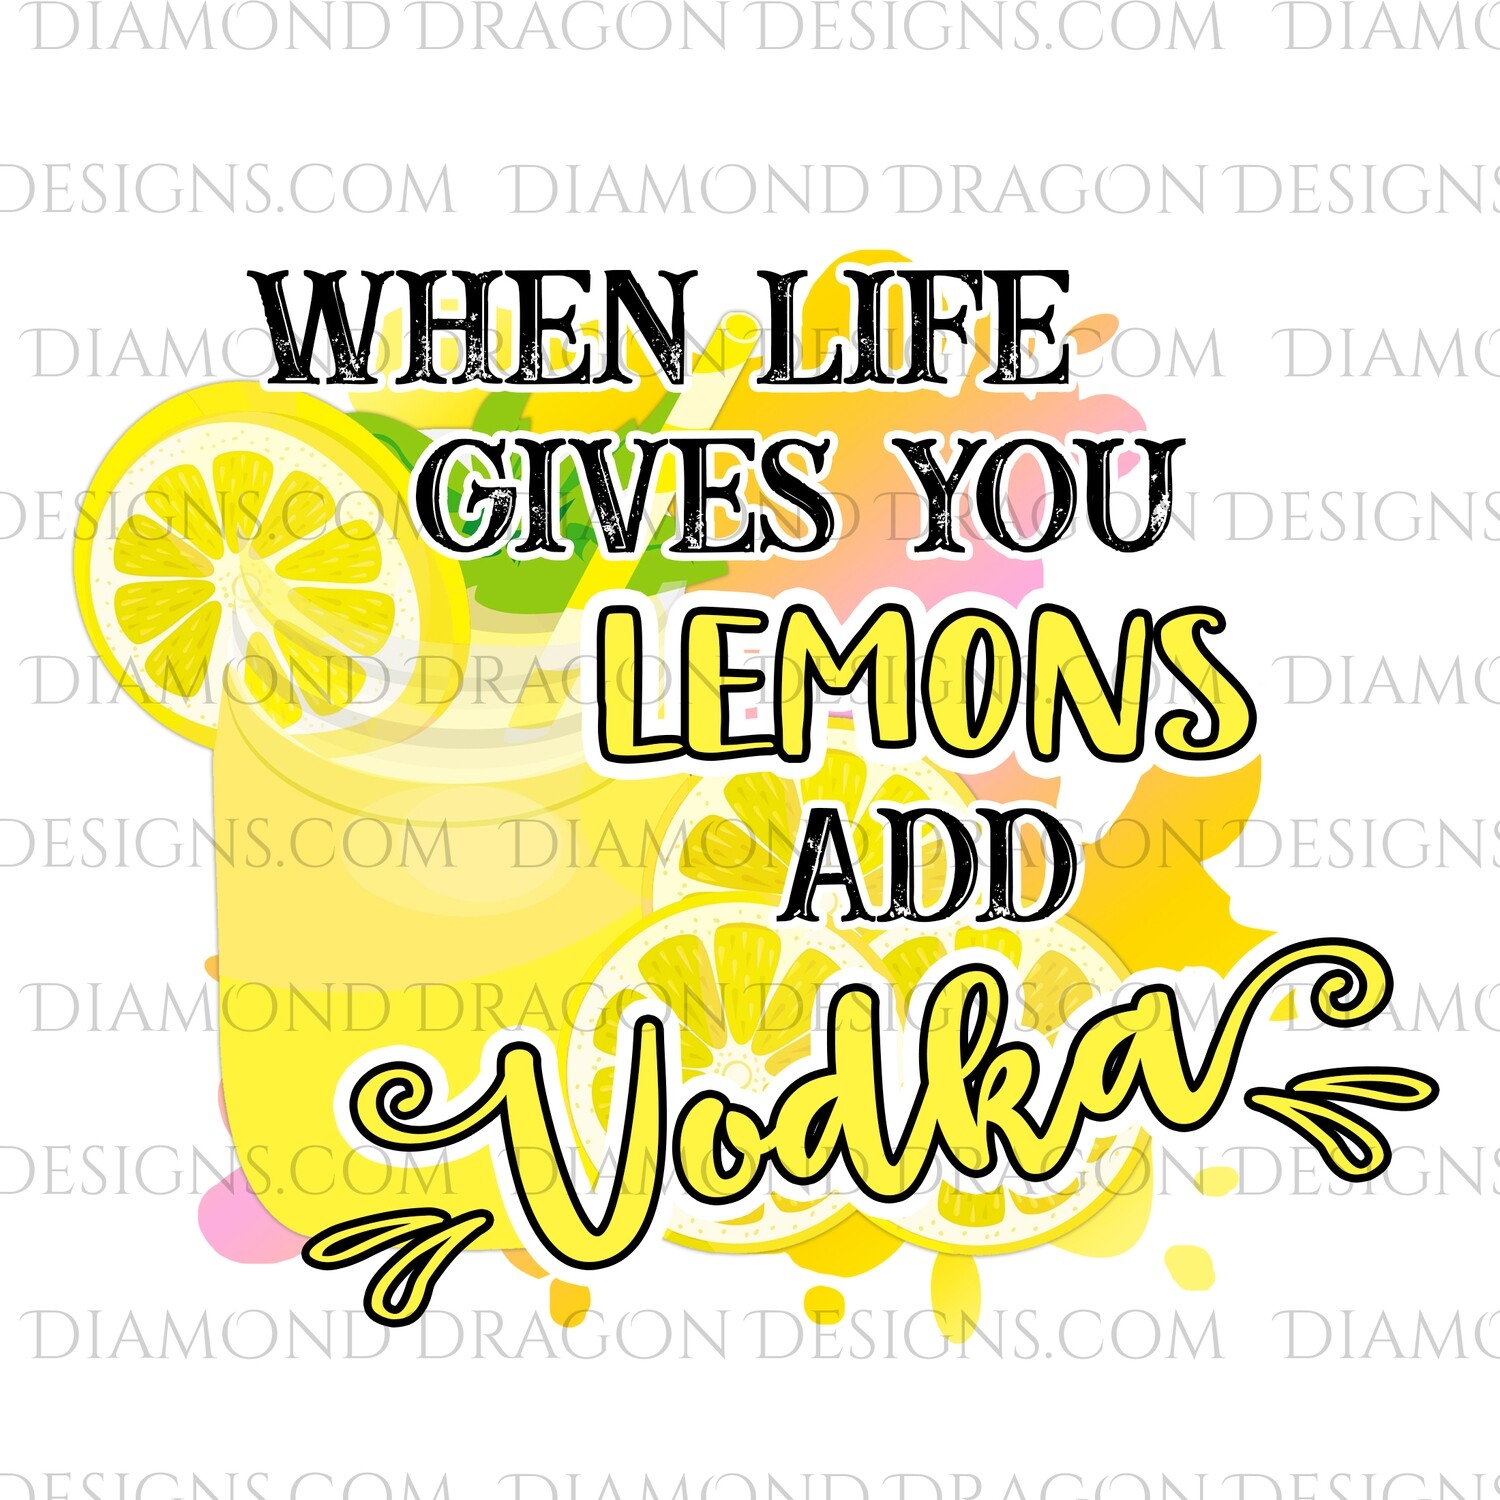 Alcohol - If Life Gives You Lemons Add Vodka, Waterslide